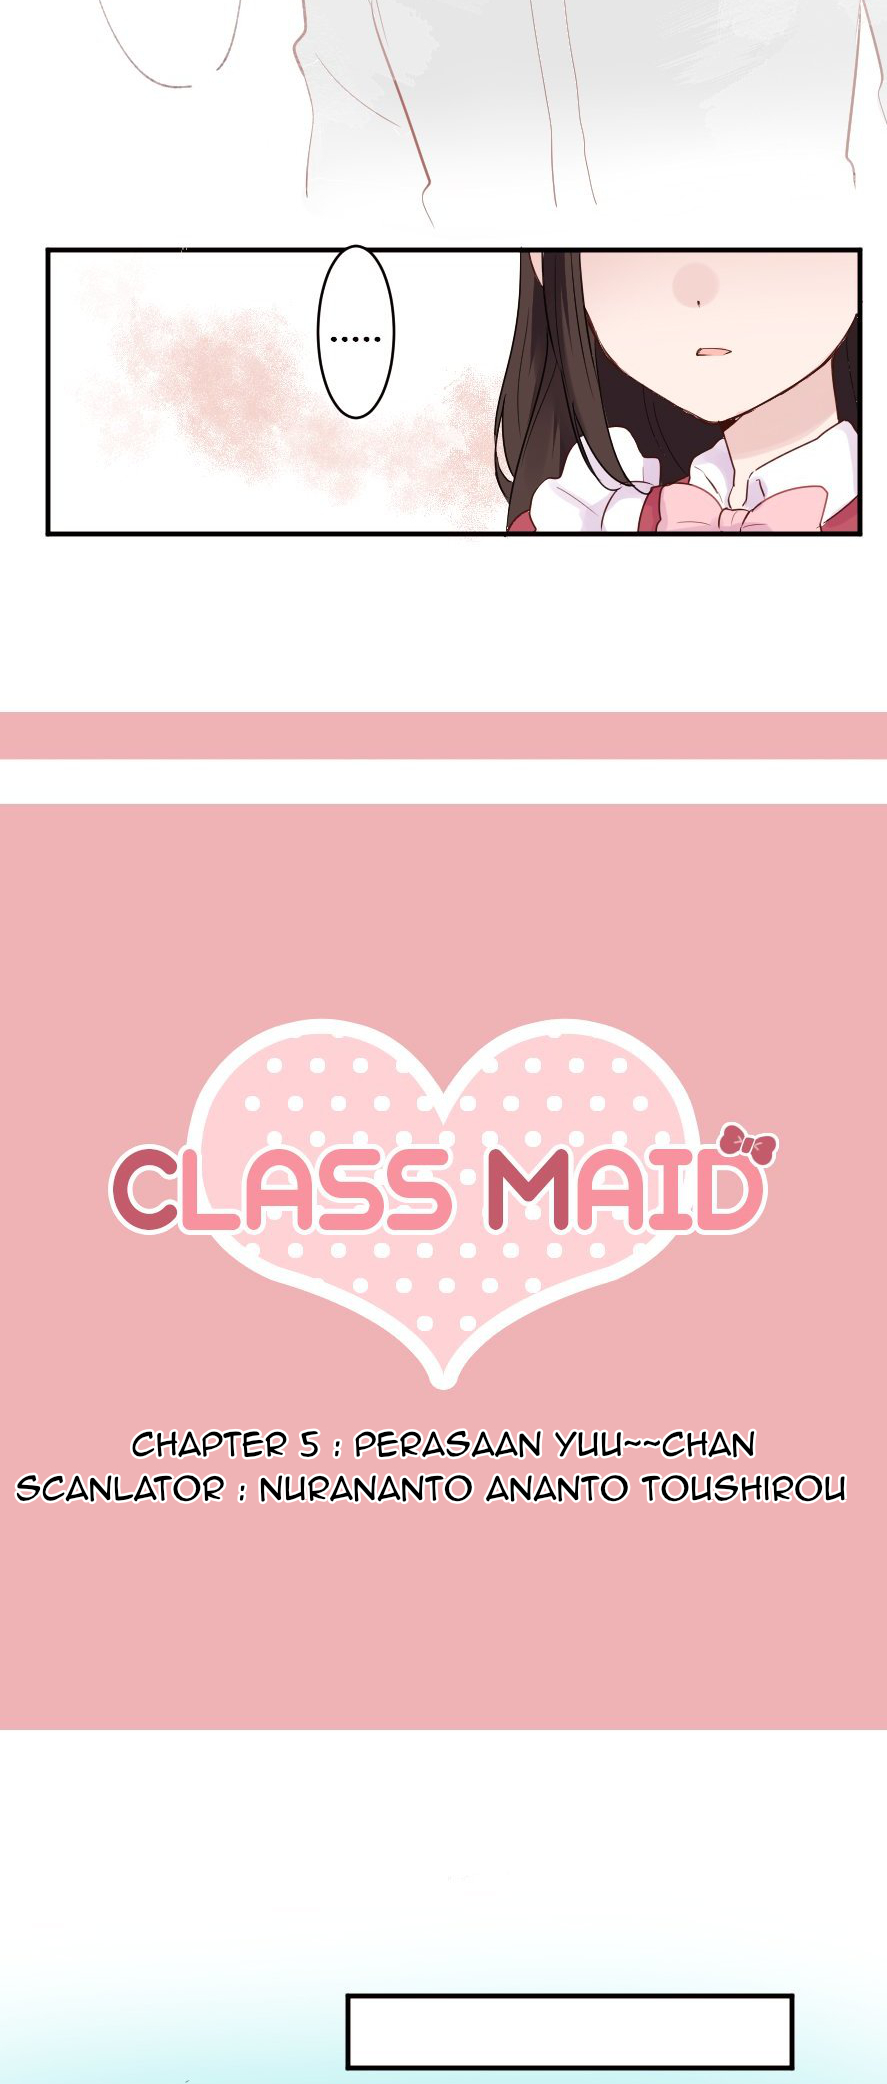 Class Maid (shimamura) Chapter 5